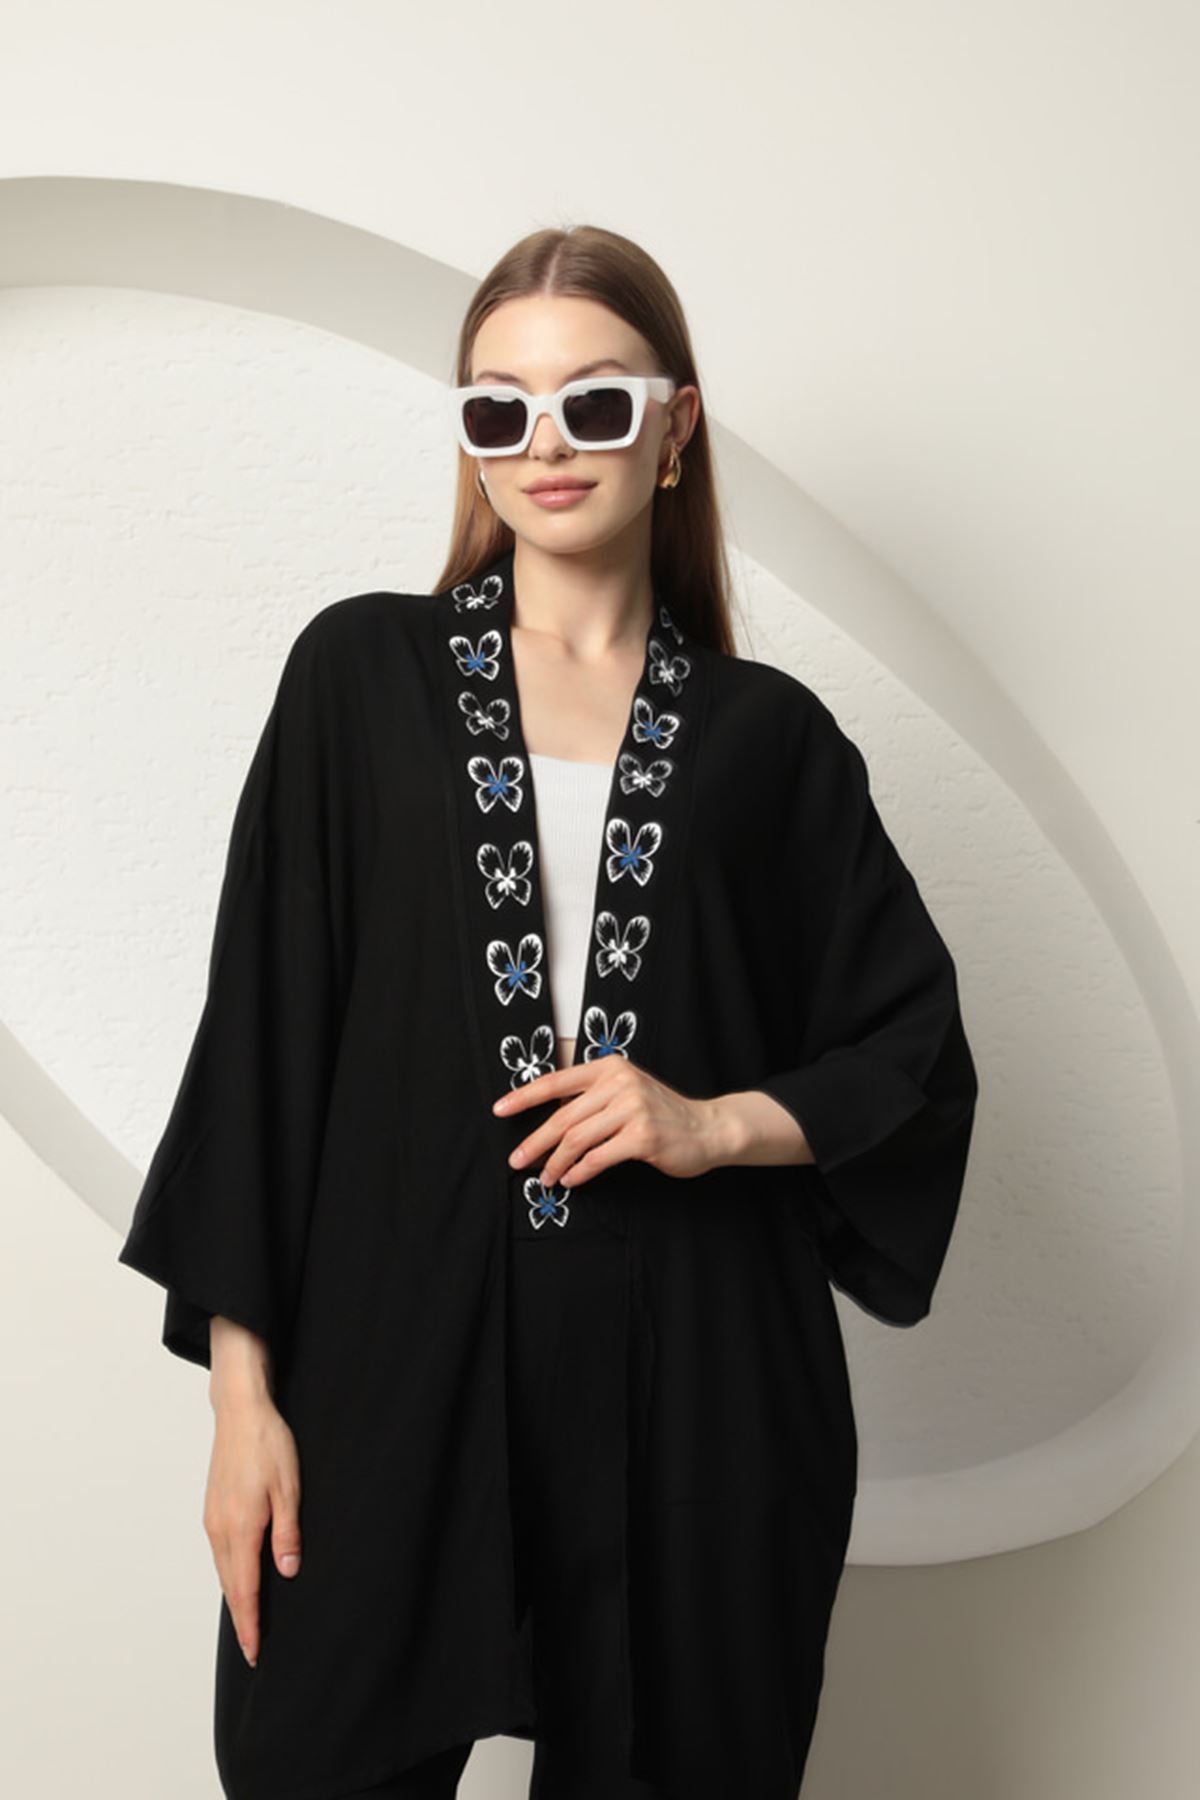 Viscose Fabric Women's Suit-Black/Sax - STREETMODE™